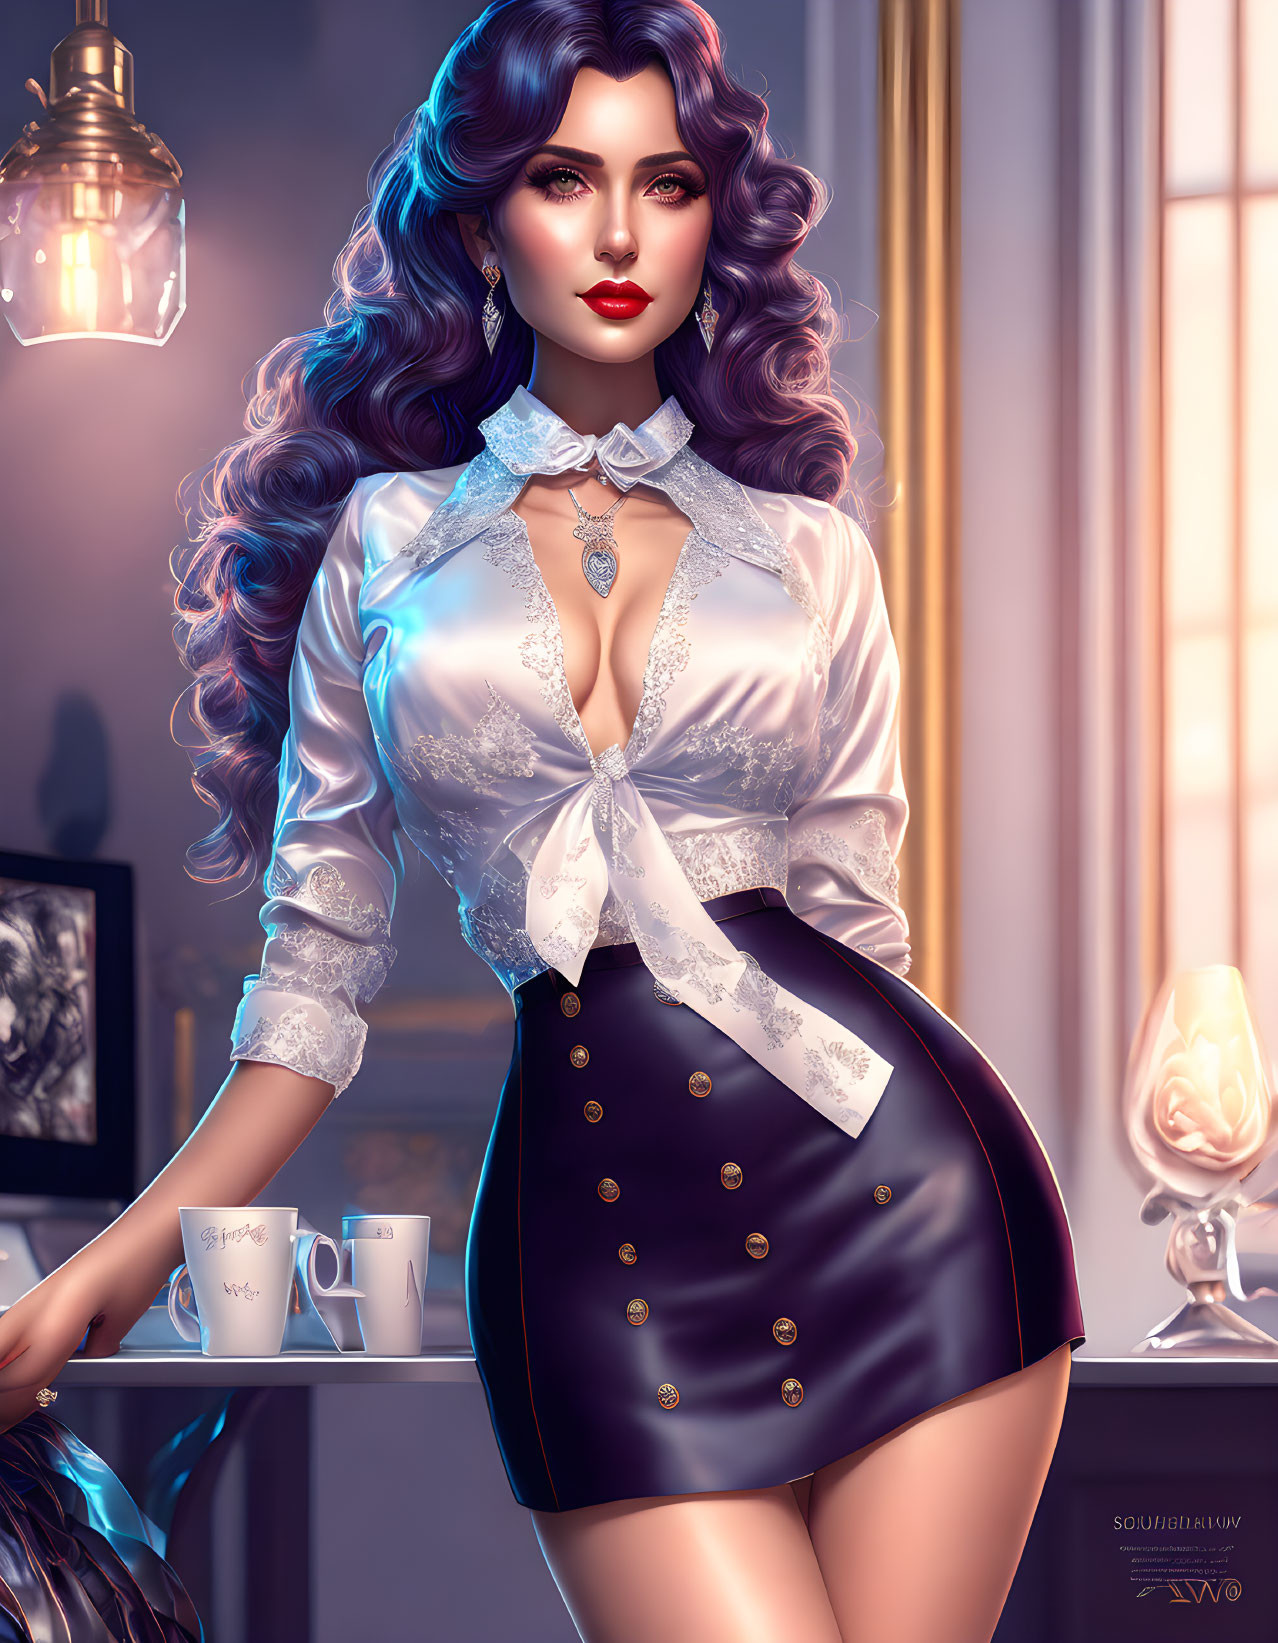 Digital artwork: Woman with blue hair, white blouse, bow tie, black skirt & pendant